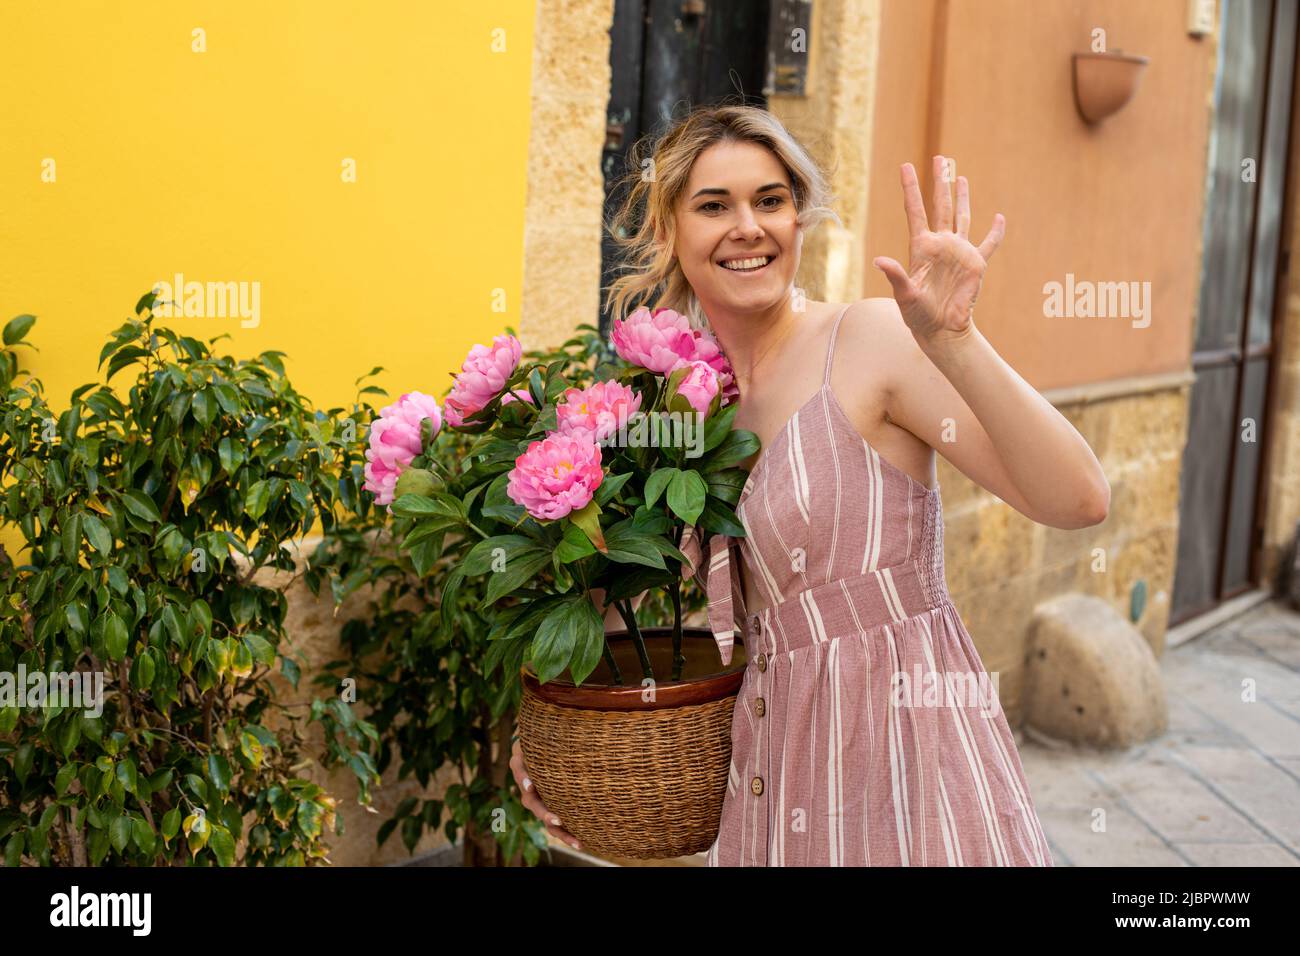 Junge lächelnde Frau im Sommer rosa gestreiften Kleid stehen neben Olivenbäumen, hält Topf mit rosa Pfingstrosen, begrüßen. Stockfoto